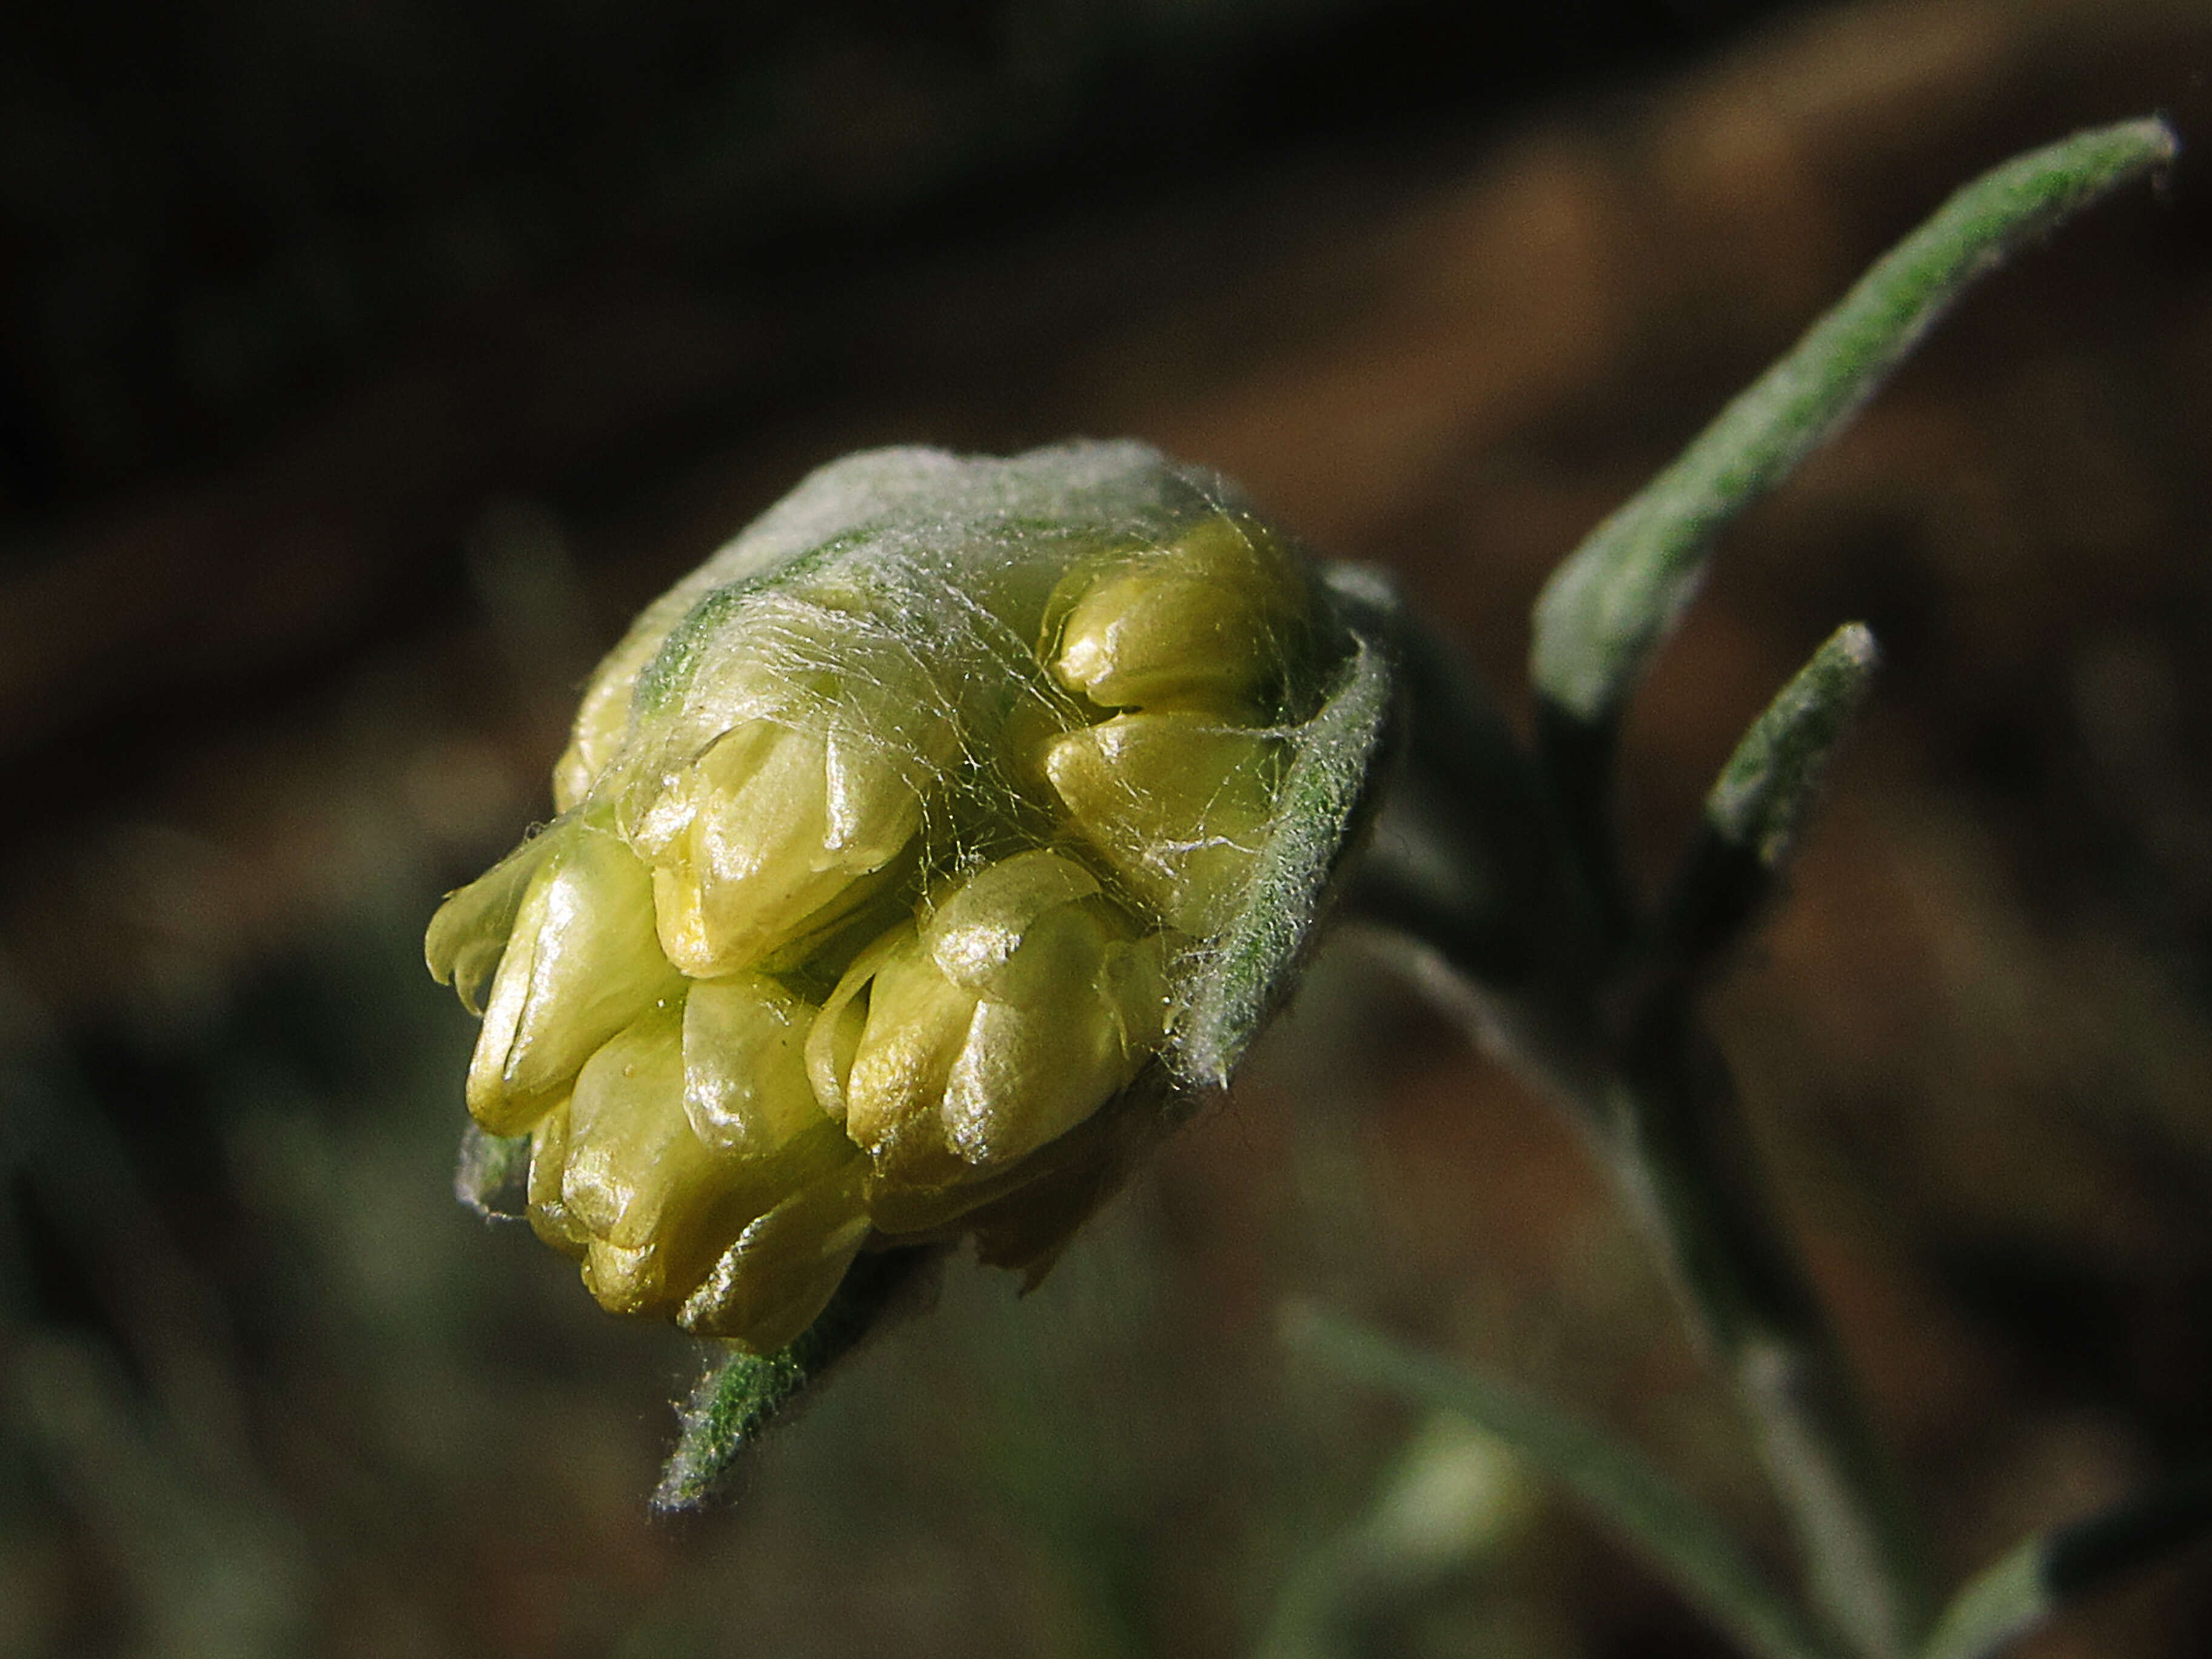 Image of yellow amaranth